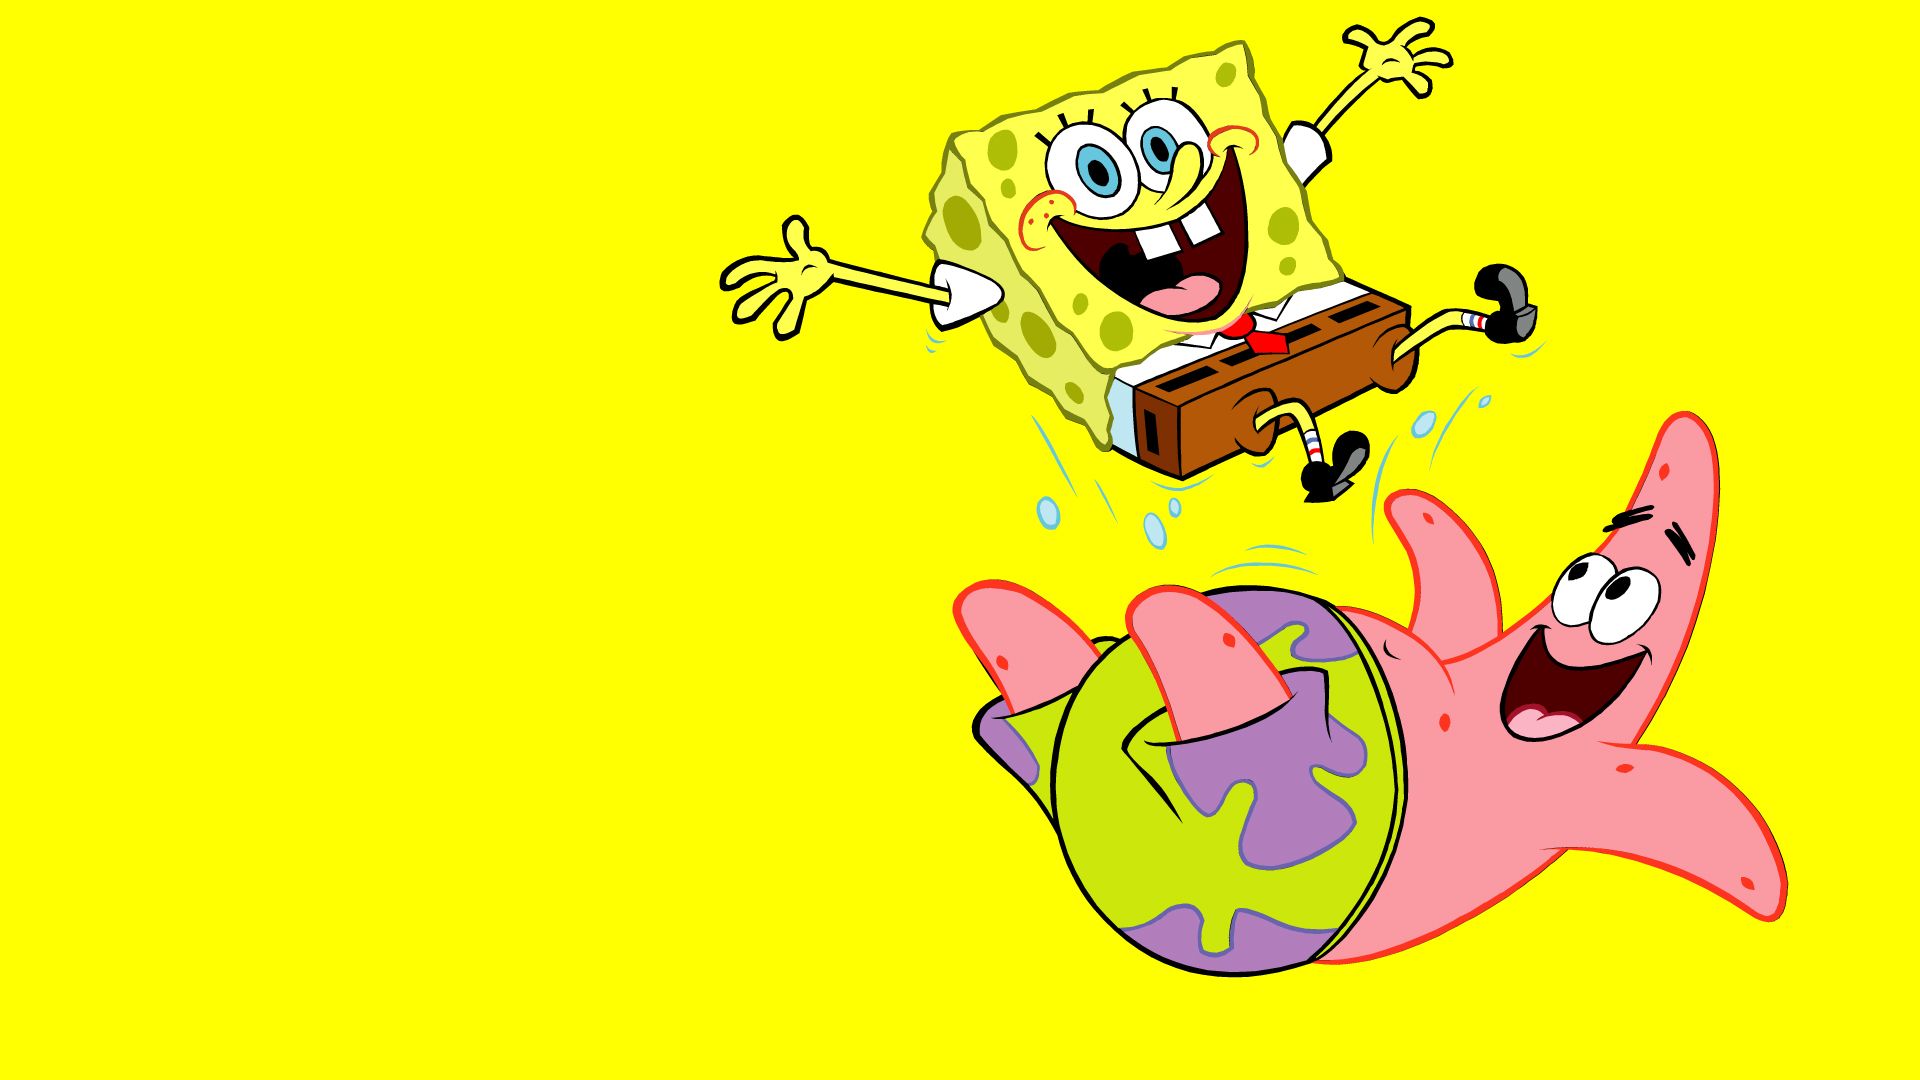 Download SpongeBob SquarePants Wallpaper Desktop Picture